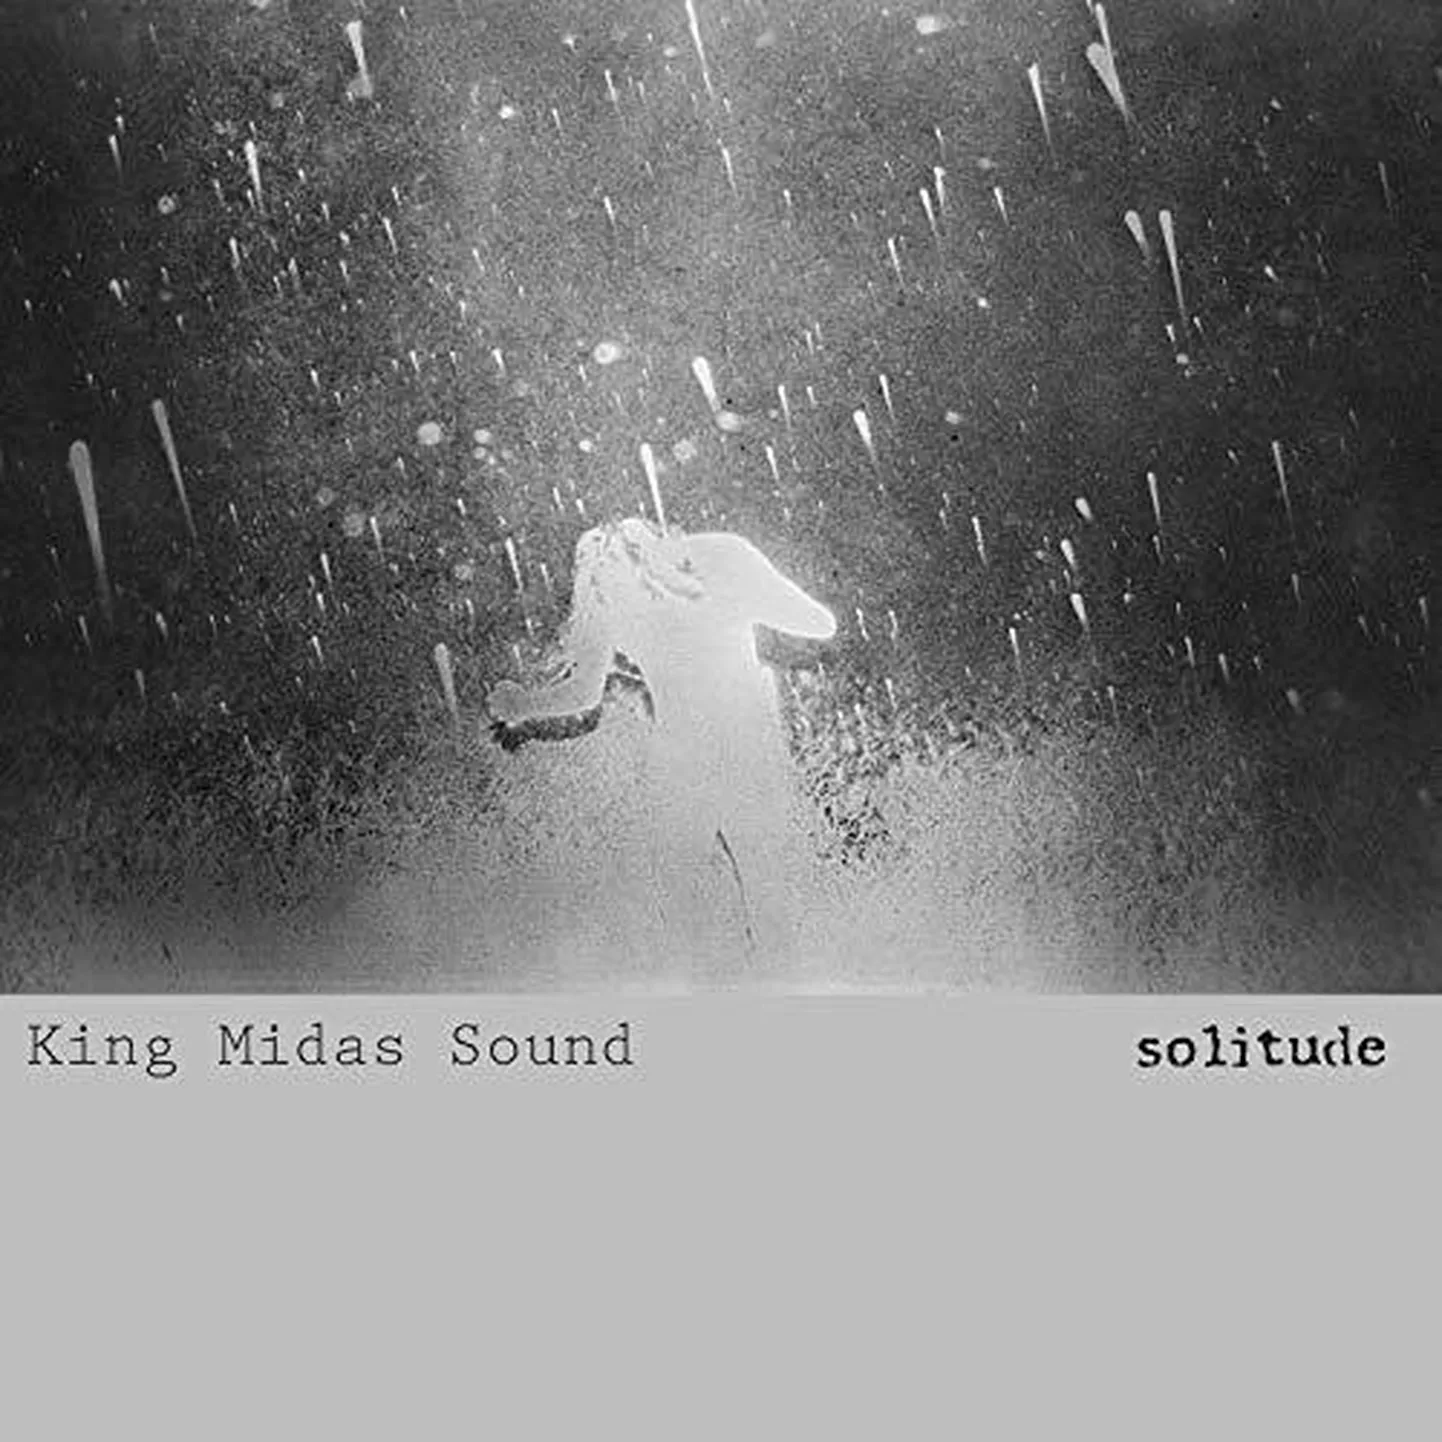 King Midas Sound plaat “Solitude”.